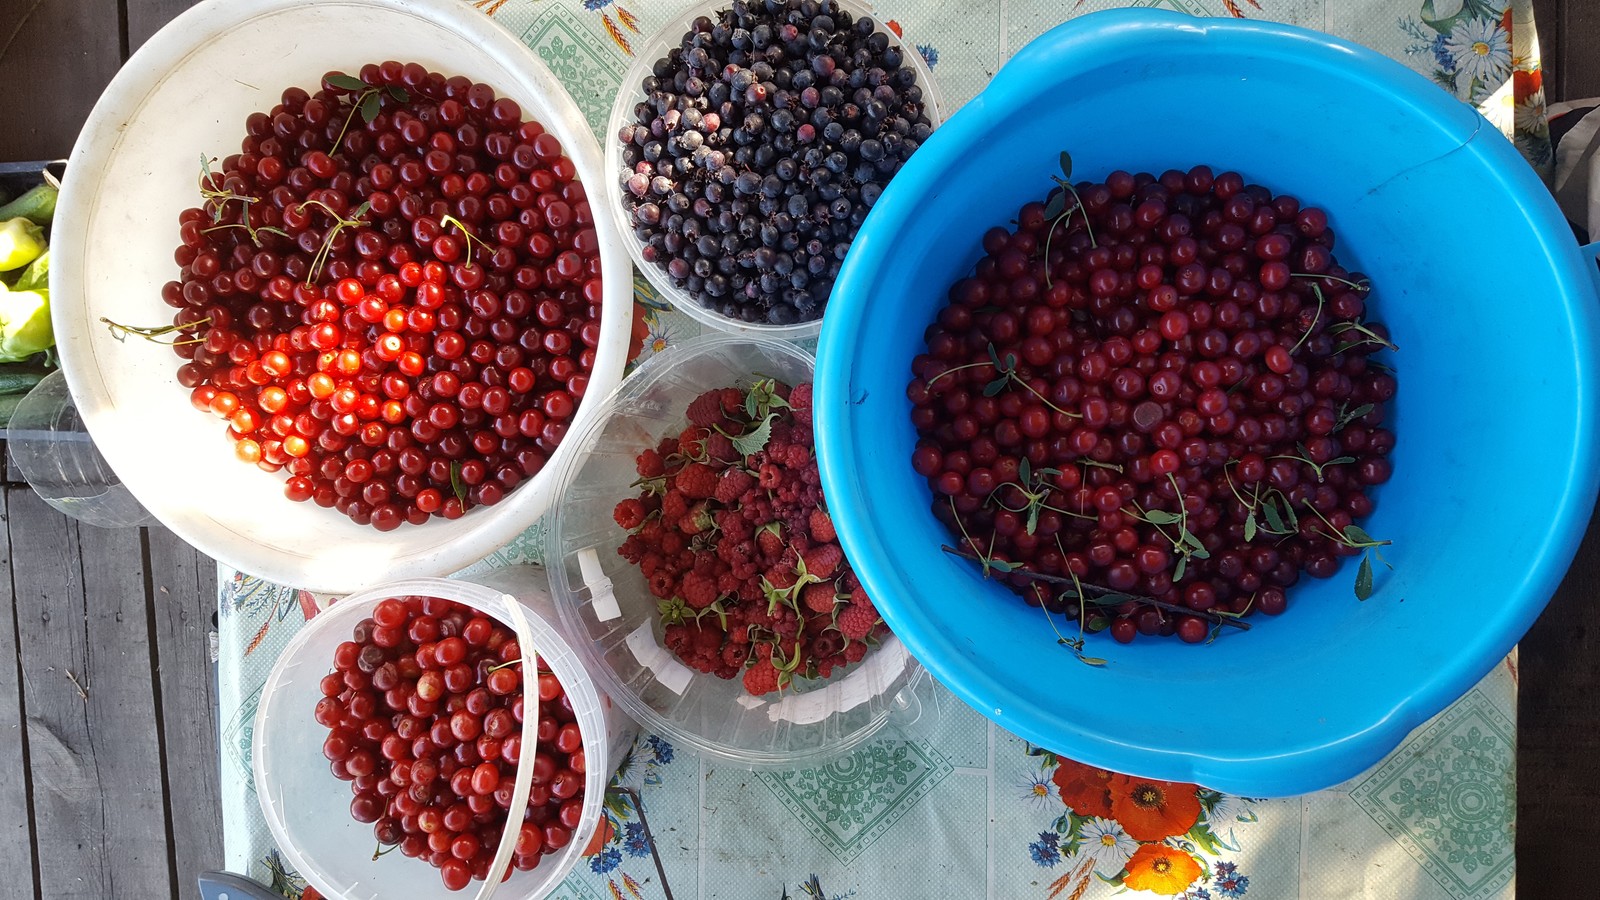 Just berries. - My, Berries, Harvest, Samsung Galaxy S6, The photo, Cherry, Raspberries, Juneberry, Longpost